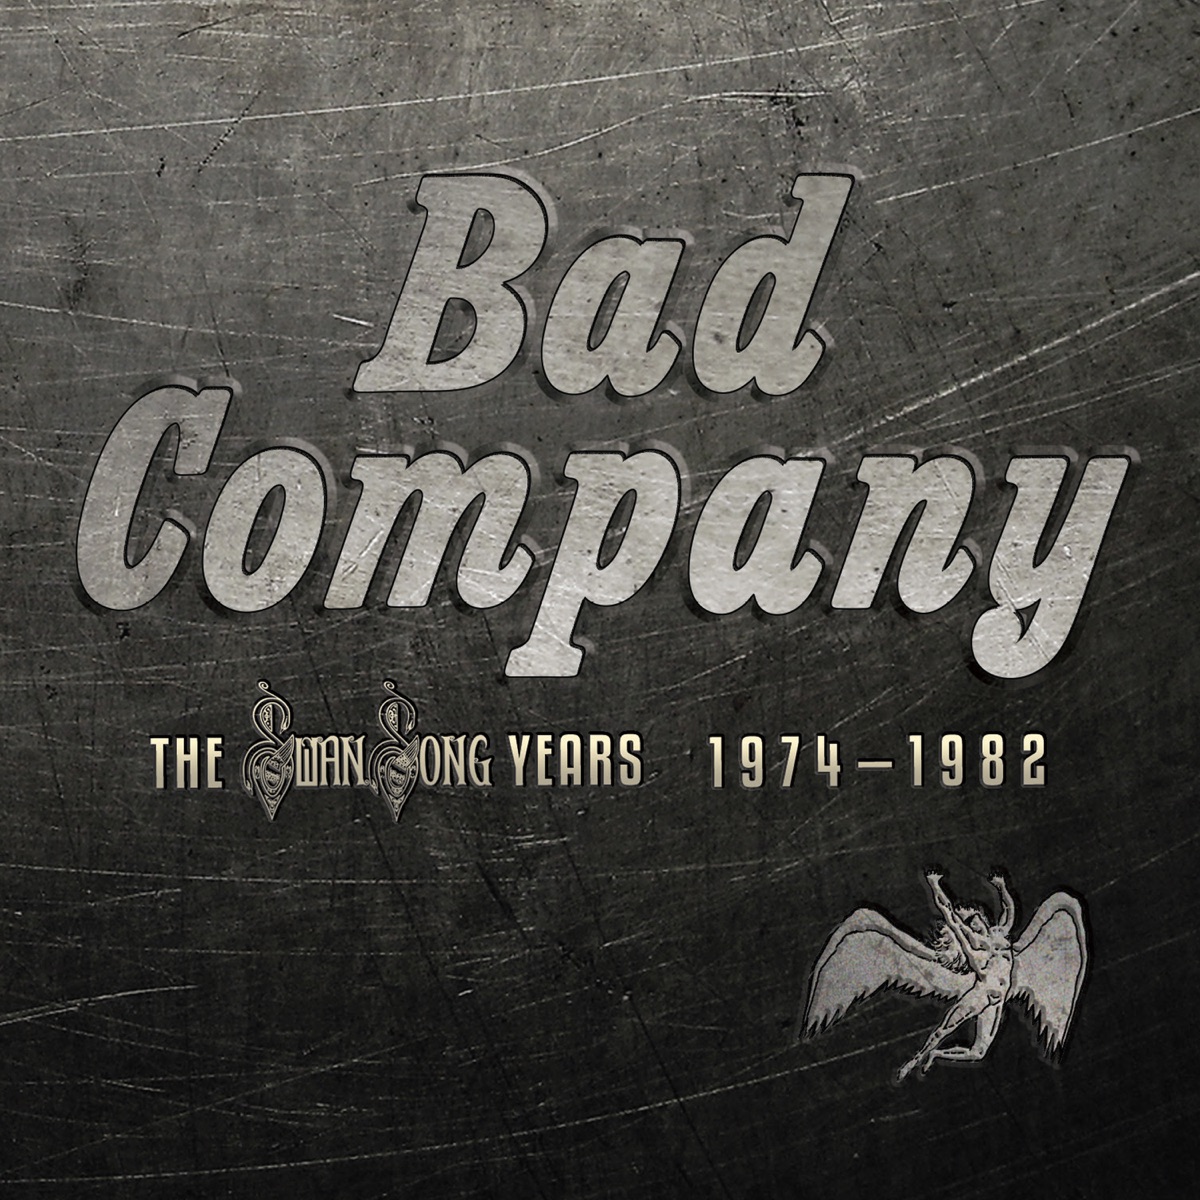 Company of Strangers (song), Bad company Wiki